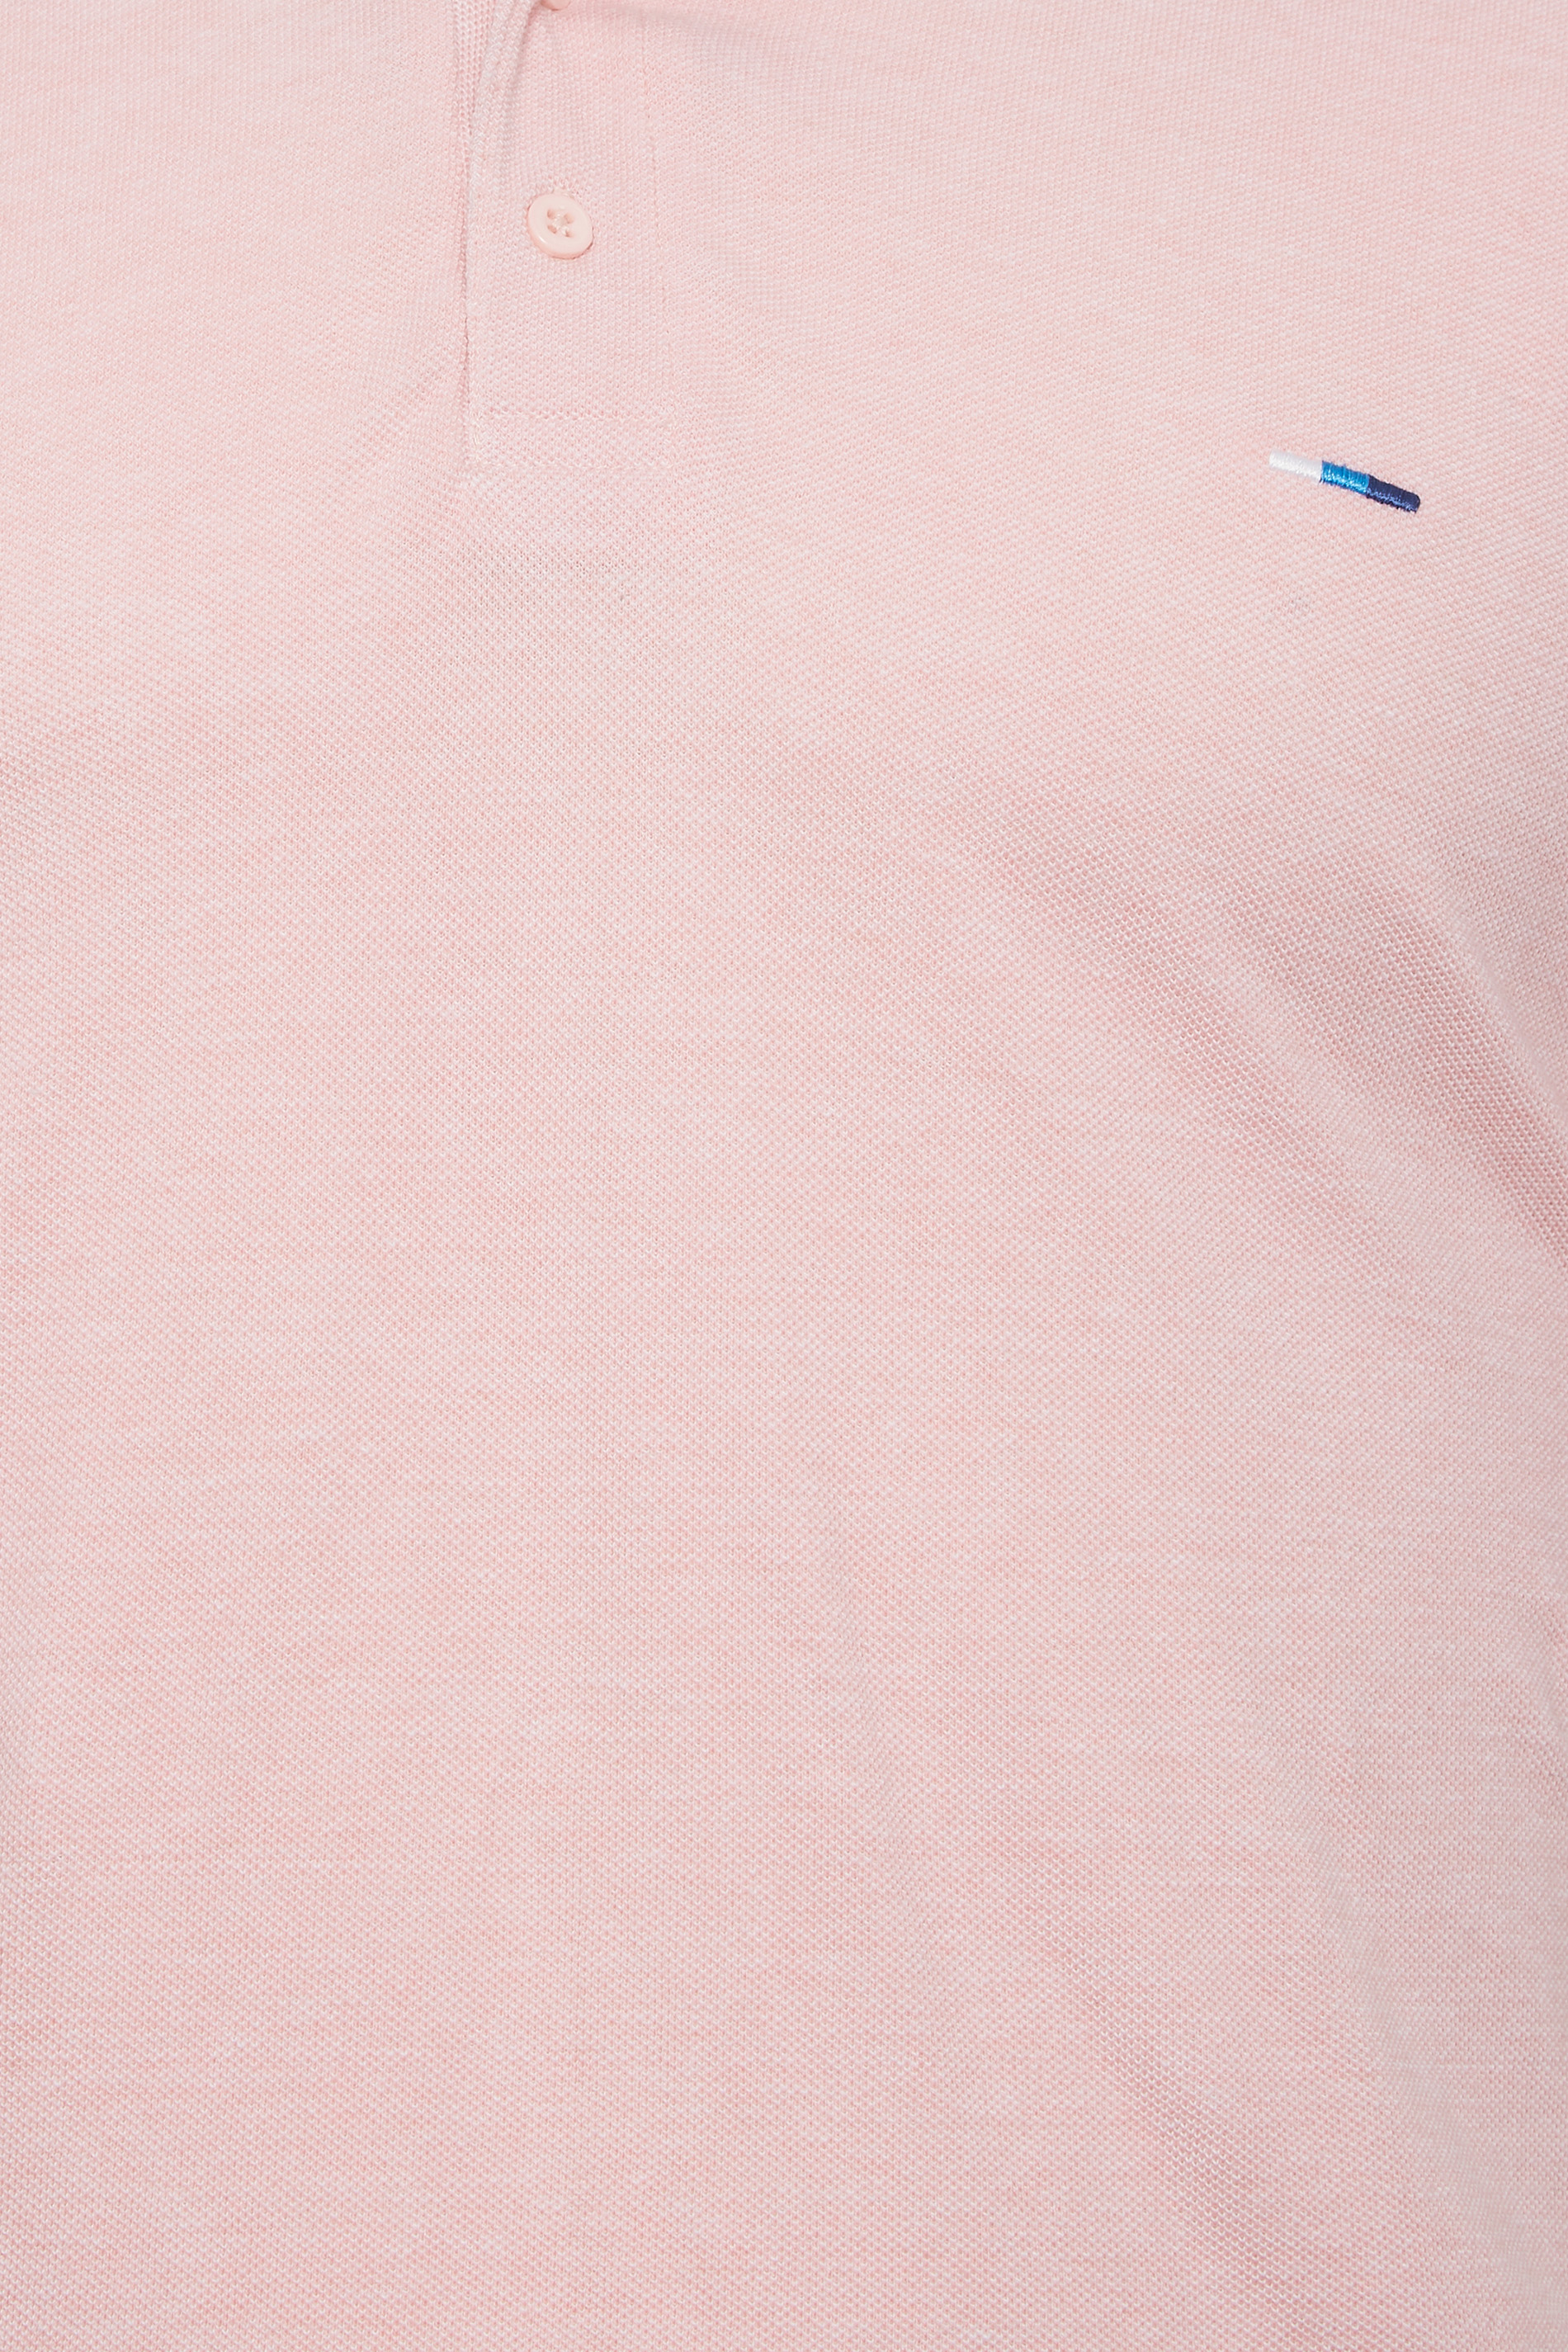 BadRhino Big & Tall Light Pink Birdseye Polo Shirt | BadRhino 2